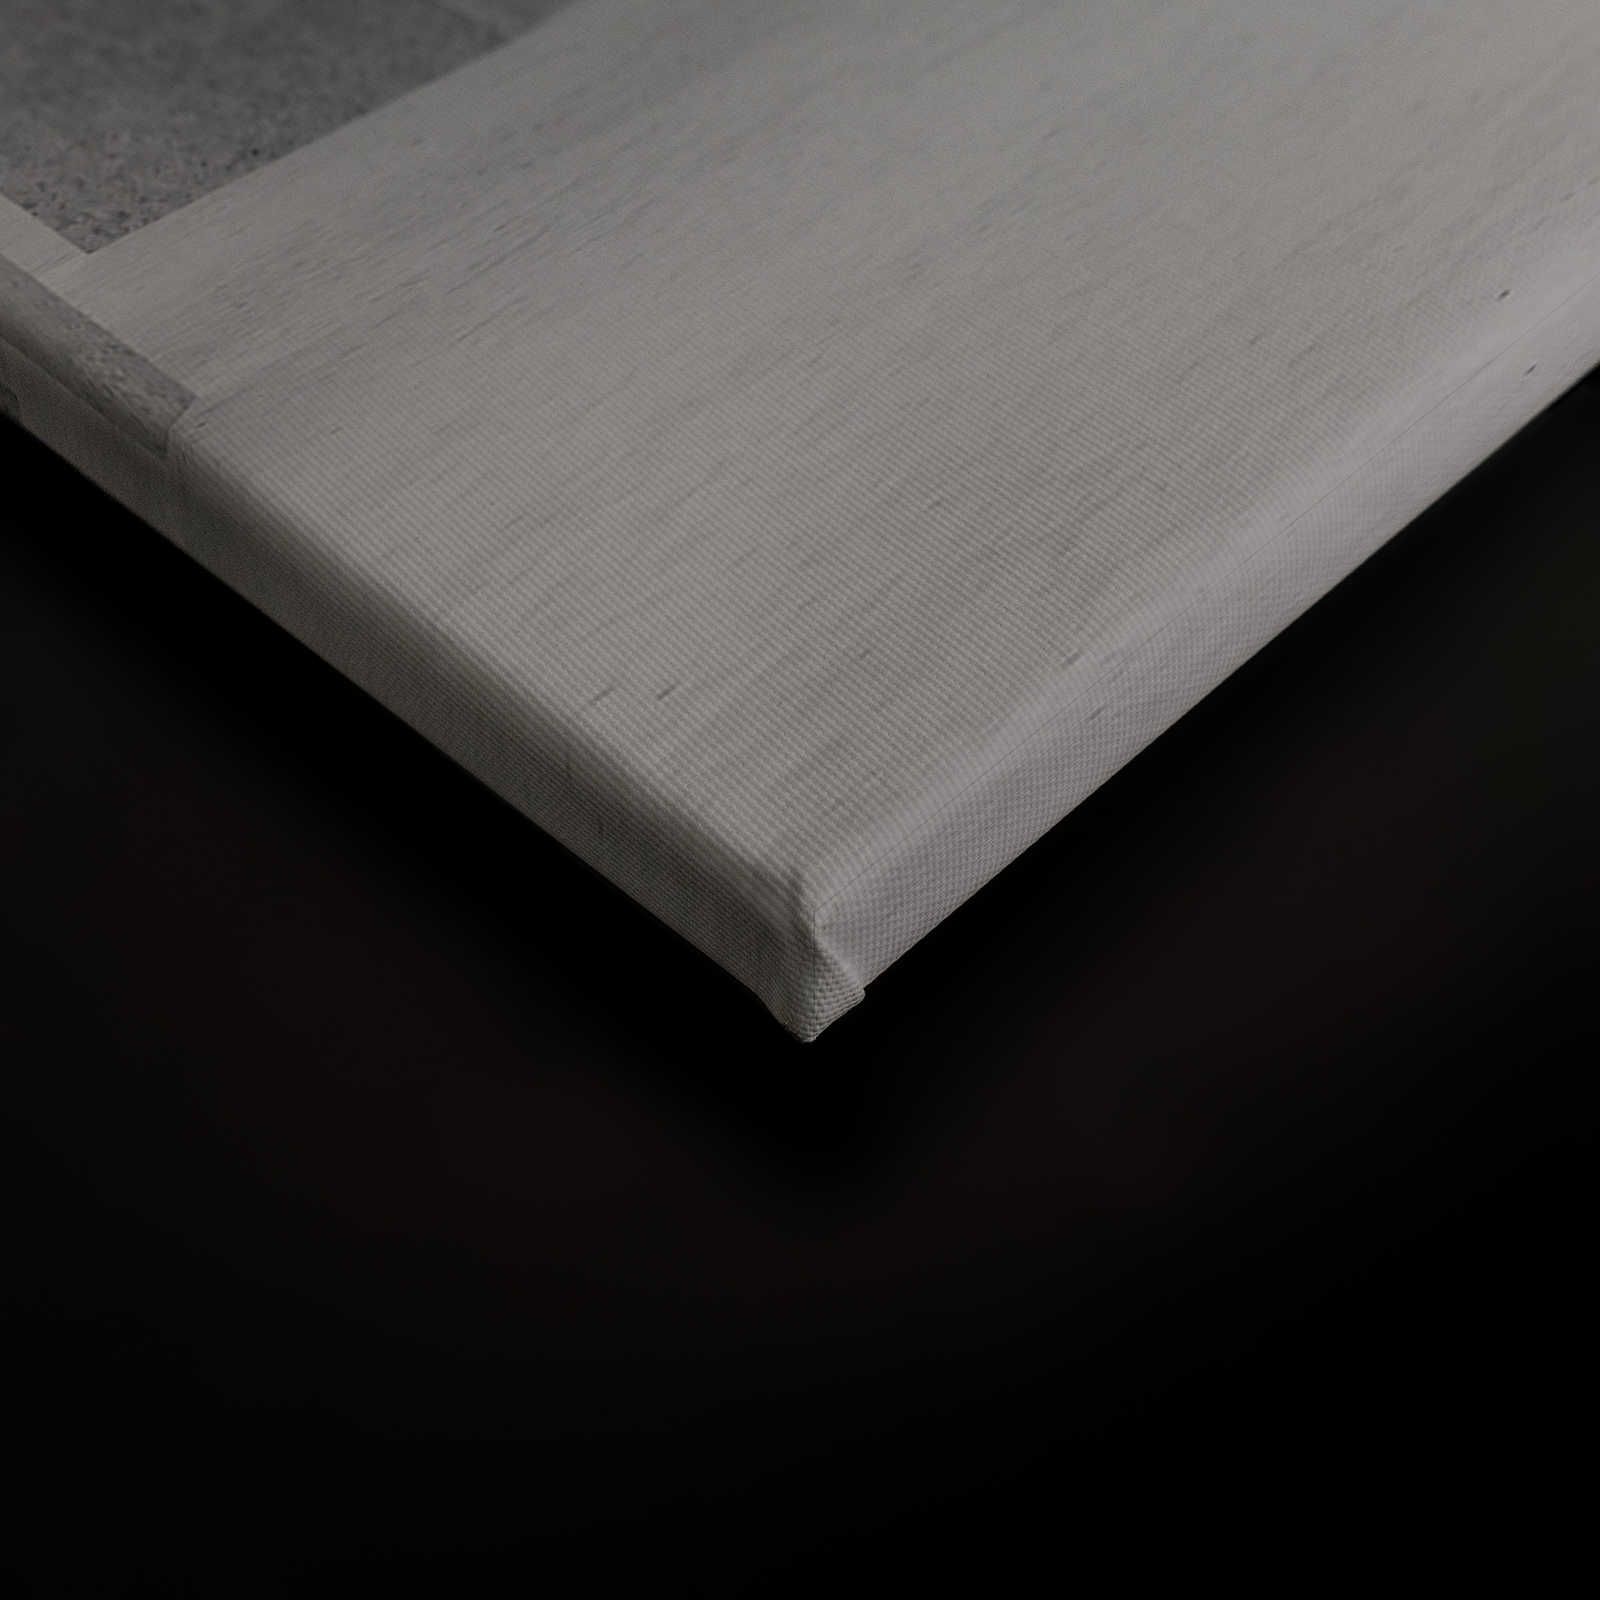             Leinwandbild mit einem 3D Beton Raum | grau – 0,90 m x 0,60 m
        